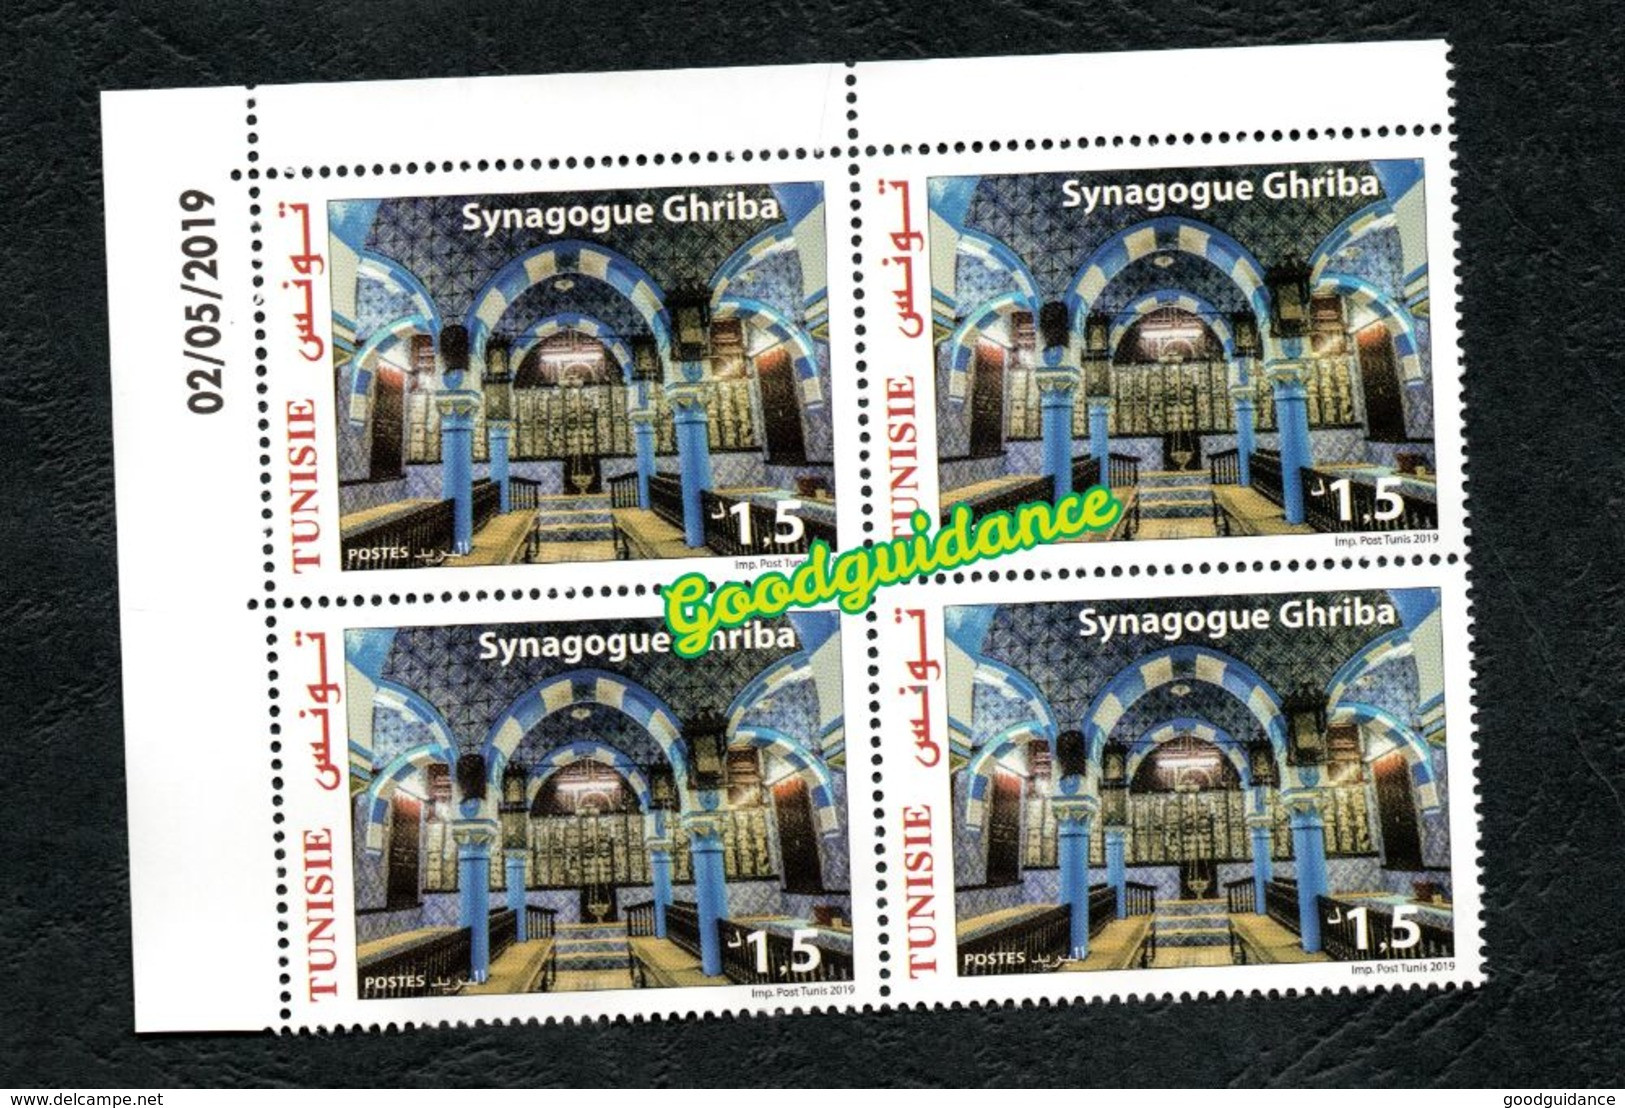 2019- Tunisie - La Synagogue De La Ghriba De Djerba- Bloc De 4 Timbres - Emission Complete Set 1v.MNH** Coin Daté - Judaisme